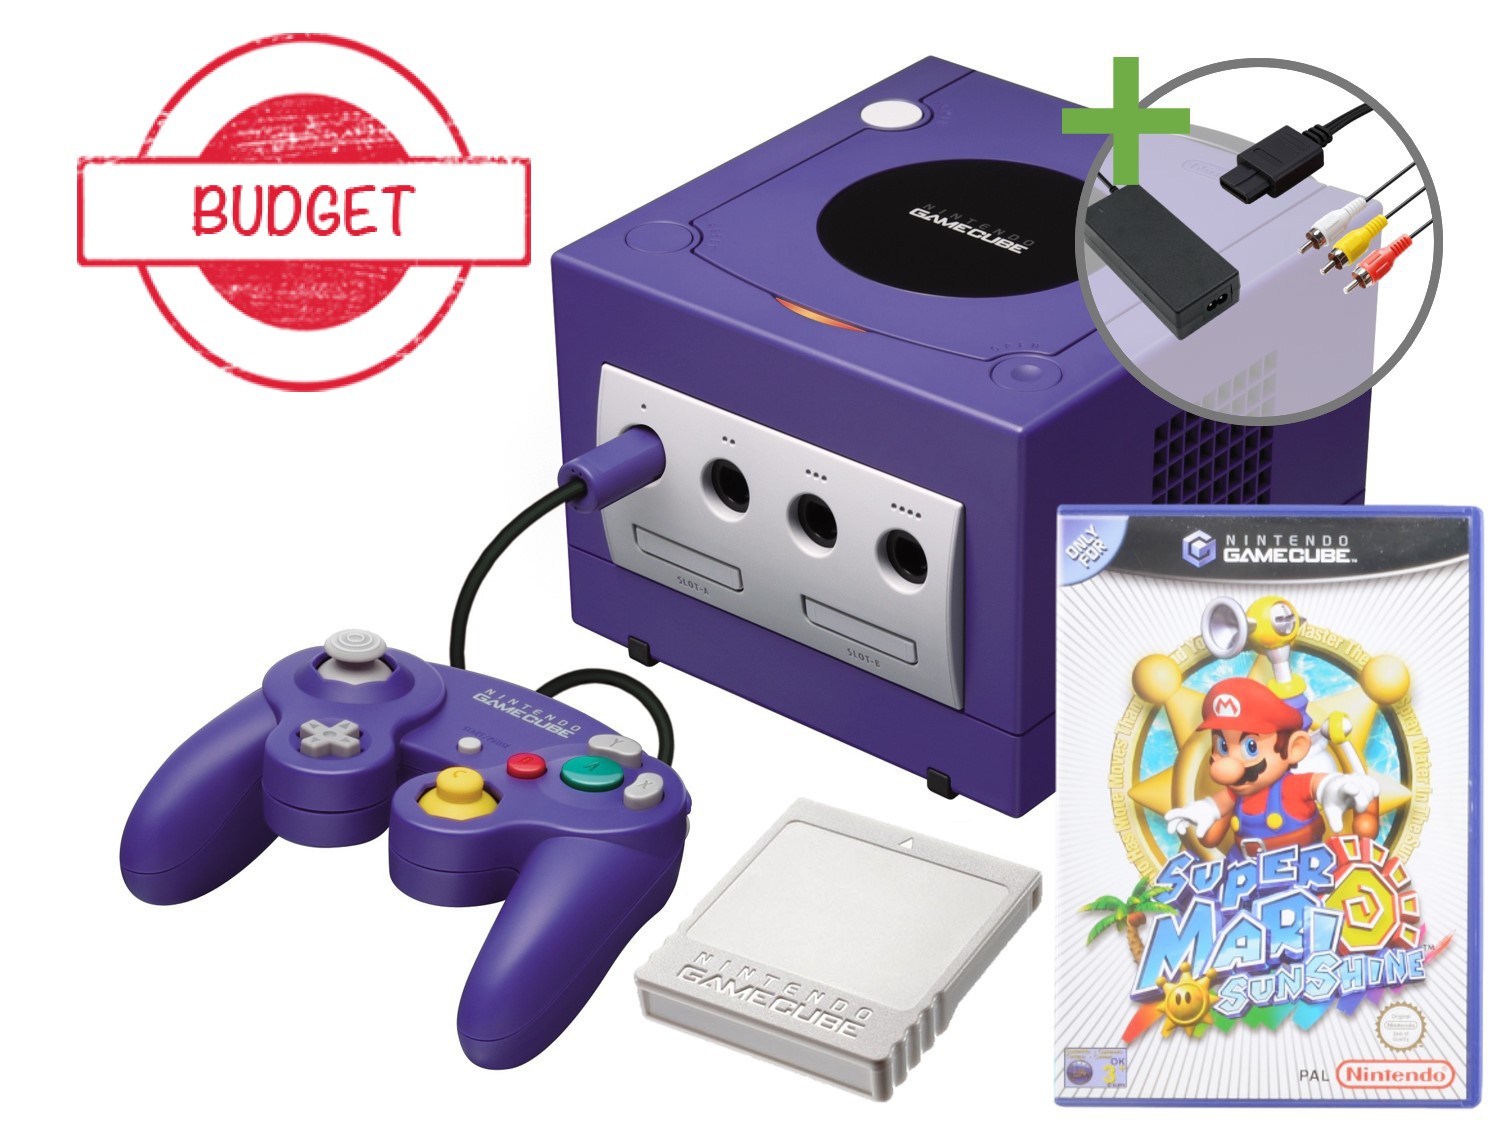 Nintendo Gamecube Starter Pack - Super Mario Sunshine Edition - Budget Kopen | Gamecube Hardware